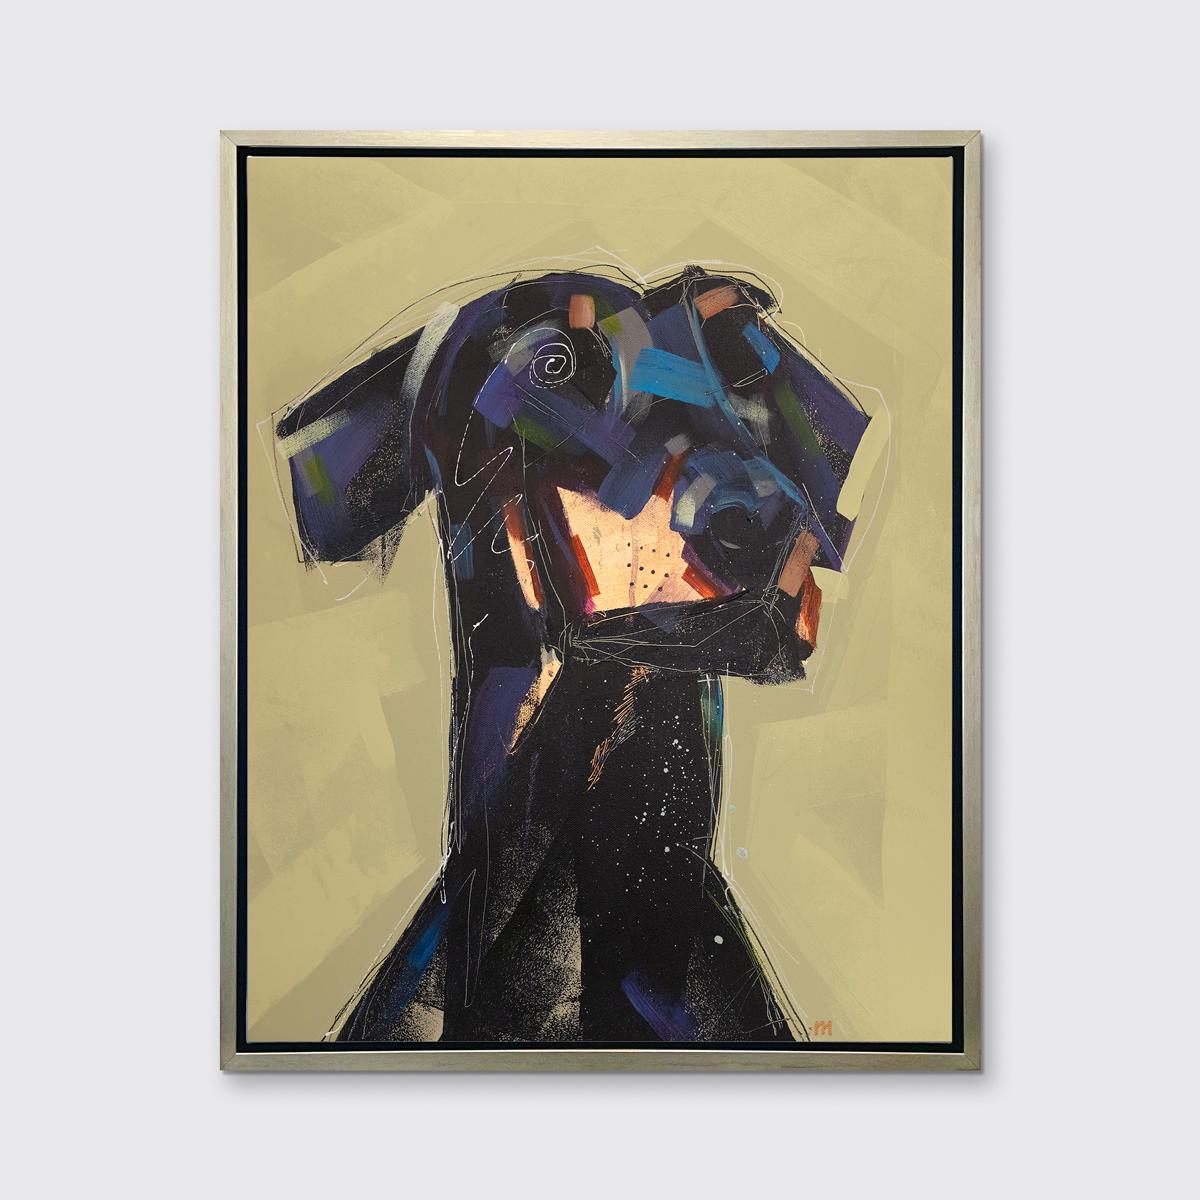 Abstract Print Russell Miyaki - "Doberman" Édition limitée Giclee, 60" x 48"